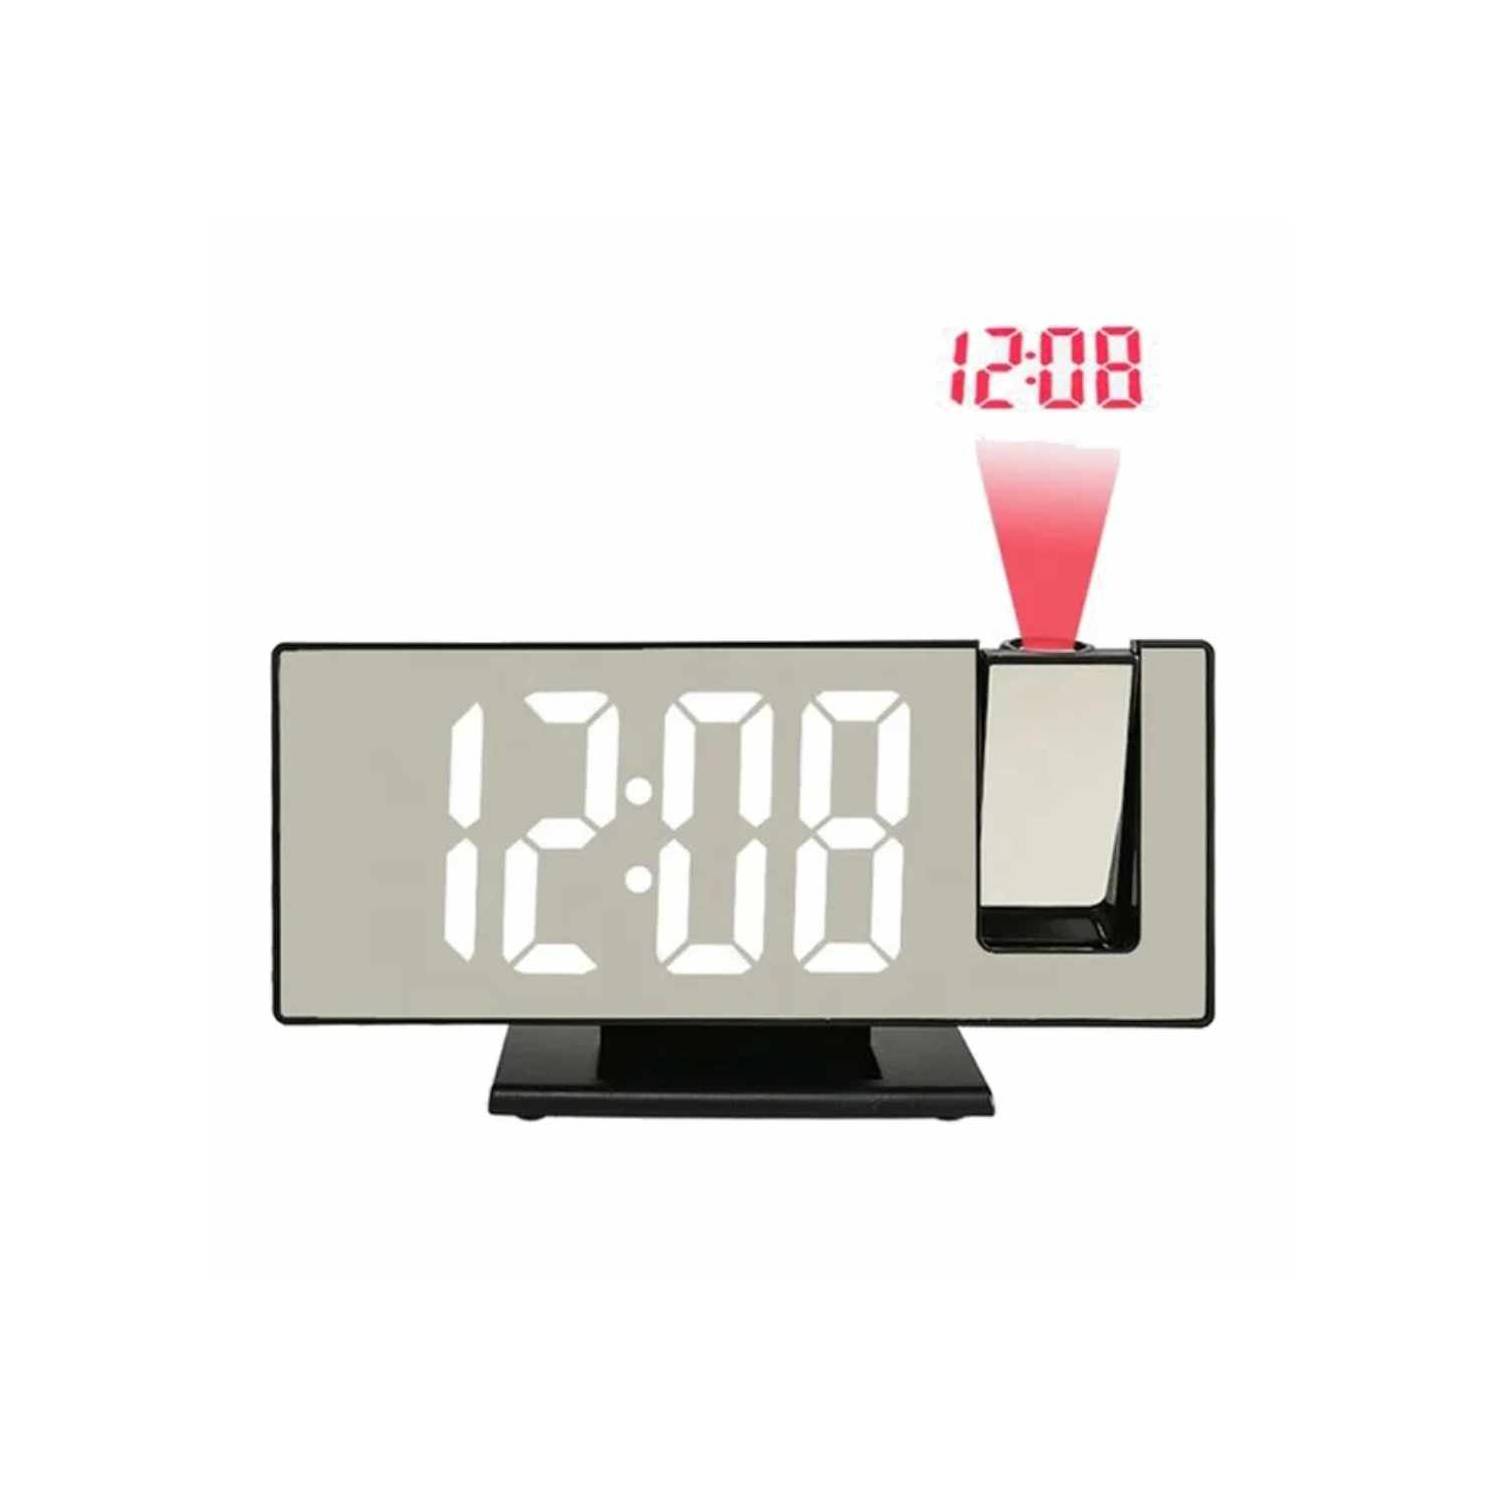 Reloj Digital Despertador Proyector Led Holograma Alarma Color Negro